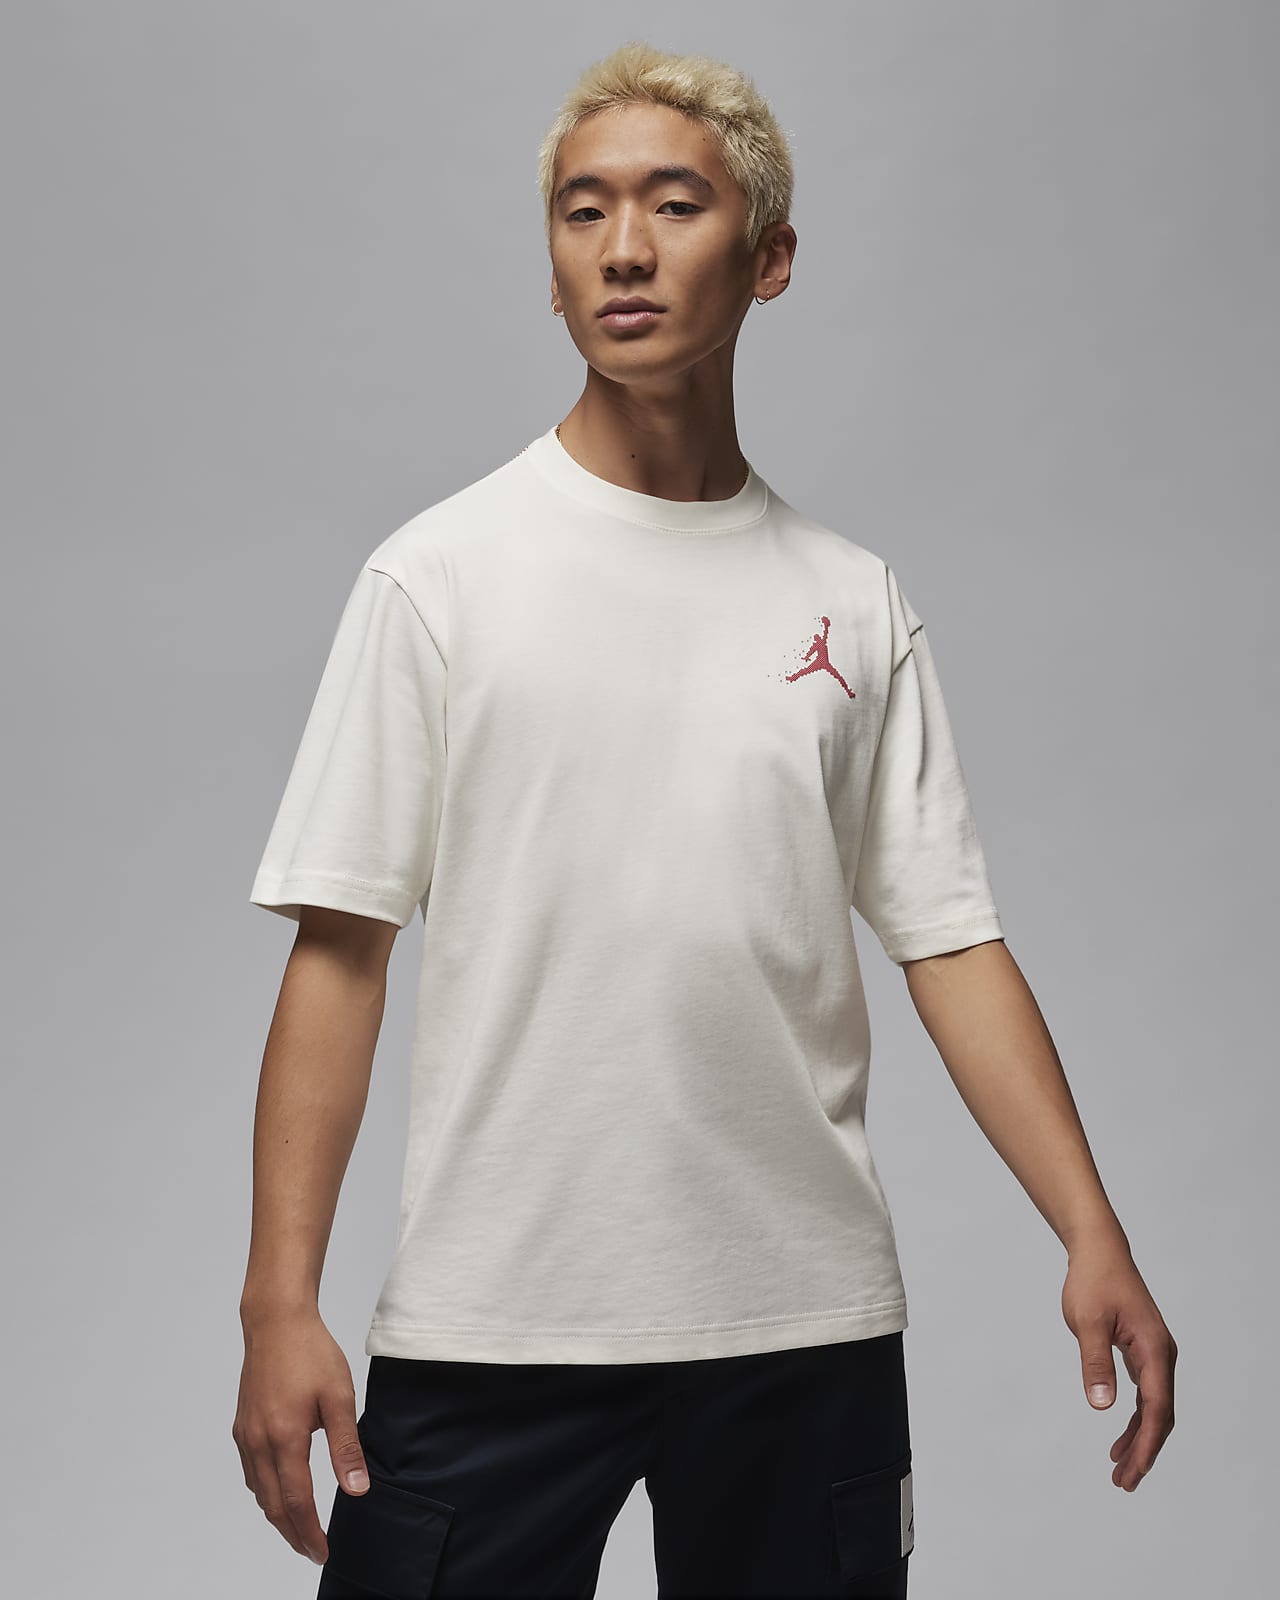 Nike Men's Team 31 Essential NBA T-Shirt